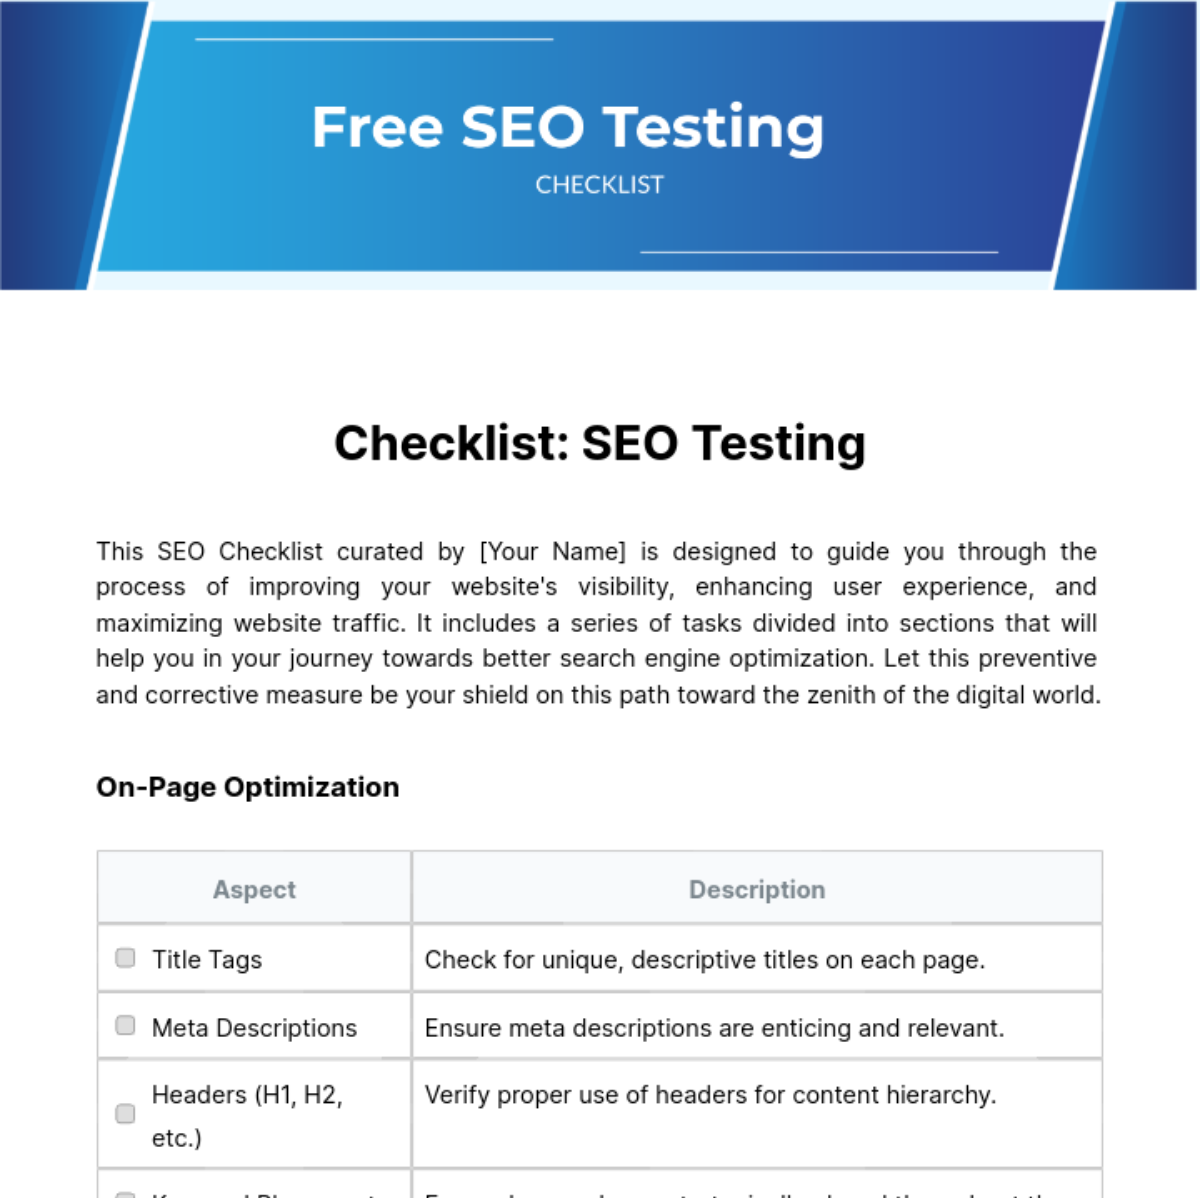 Free SEO Testing Checklist Template